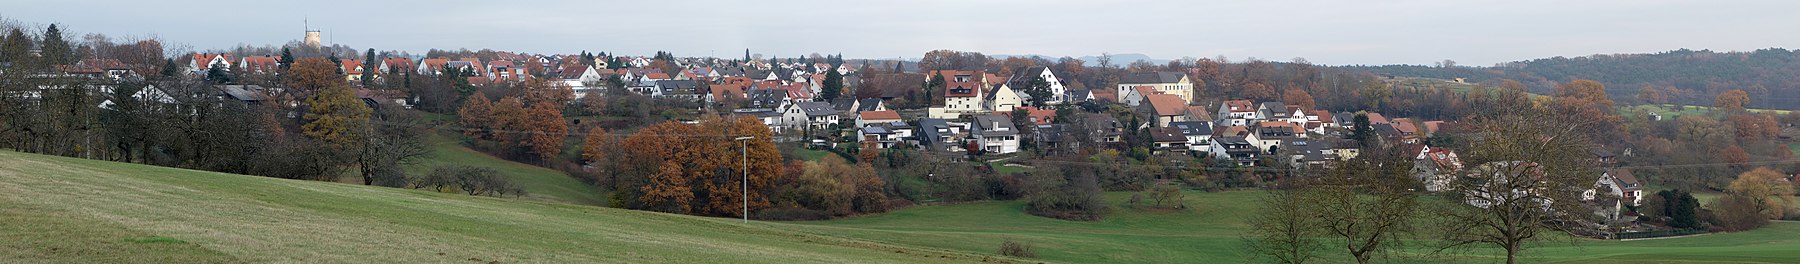 Marloffstein Panorama 02.jpg